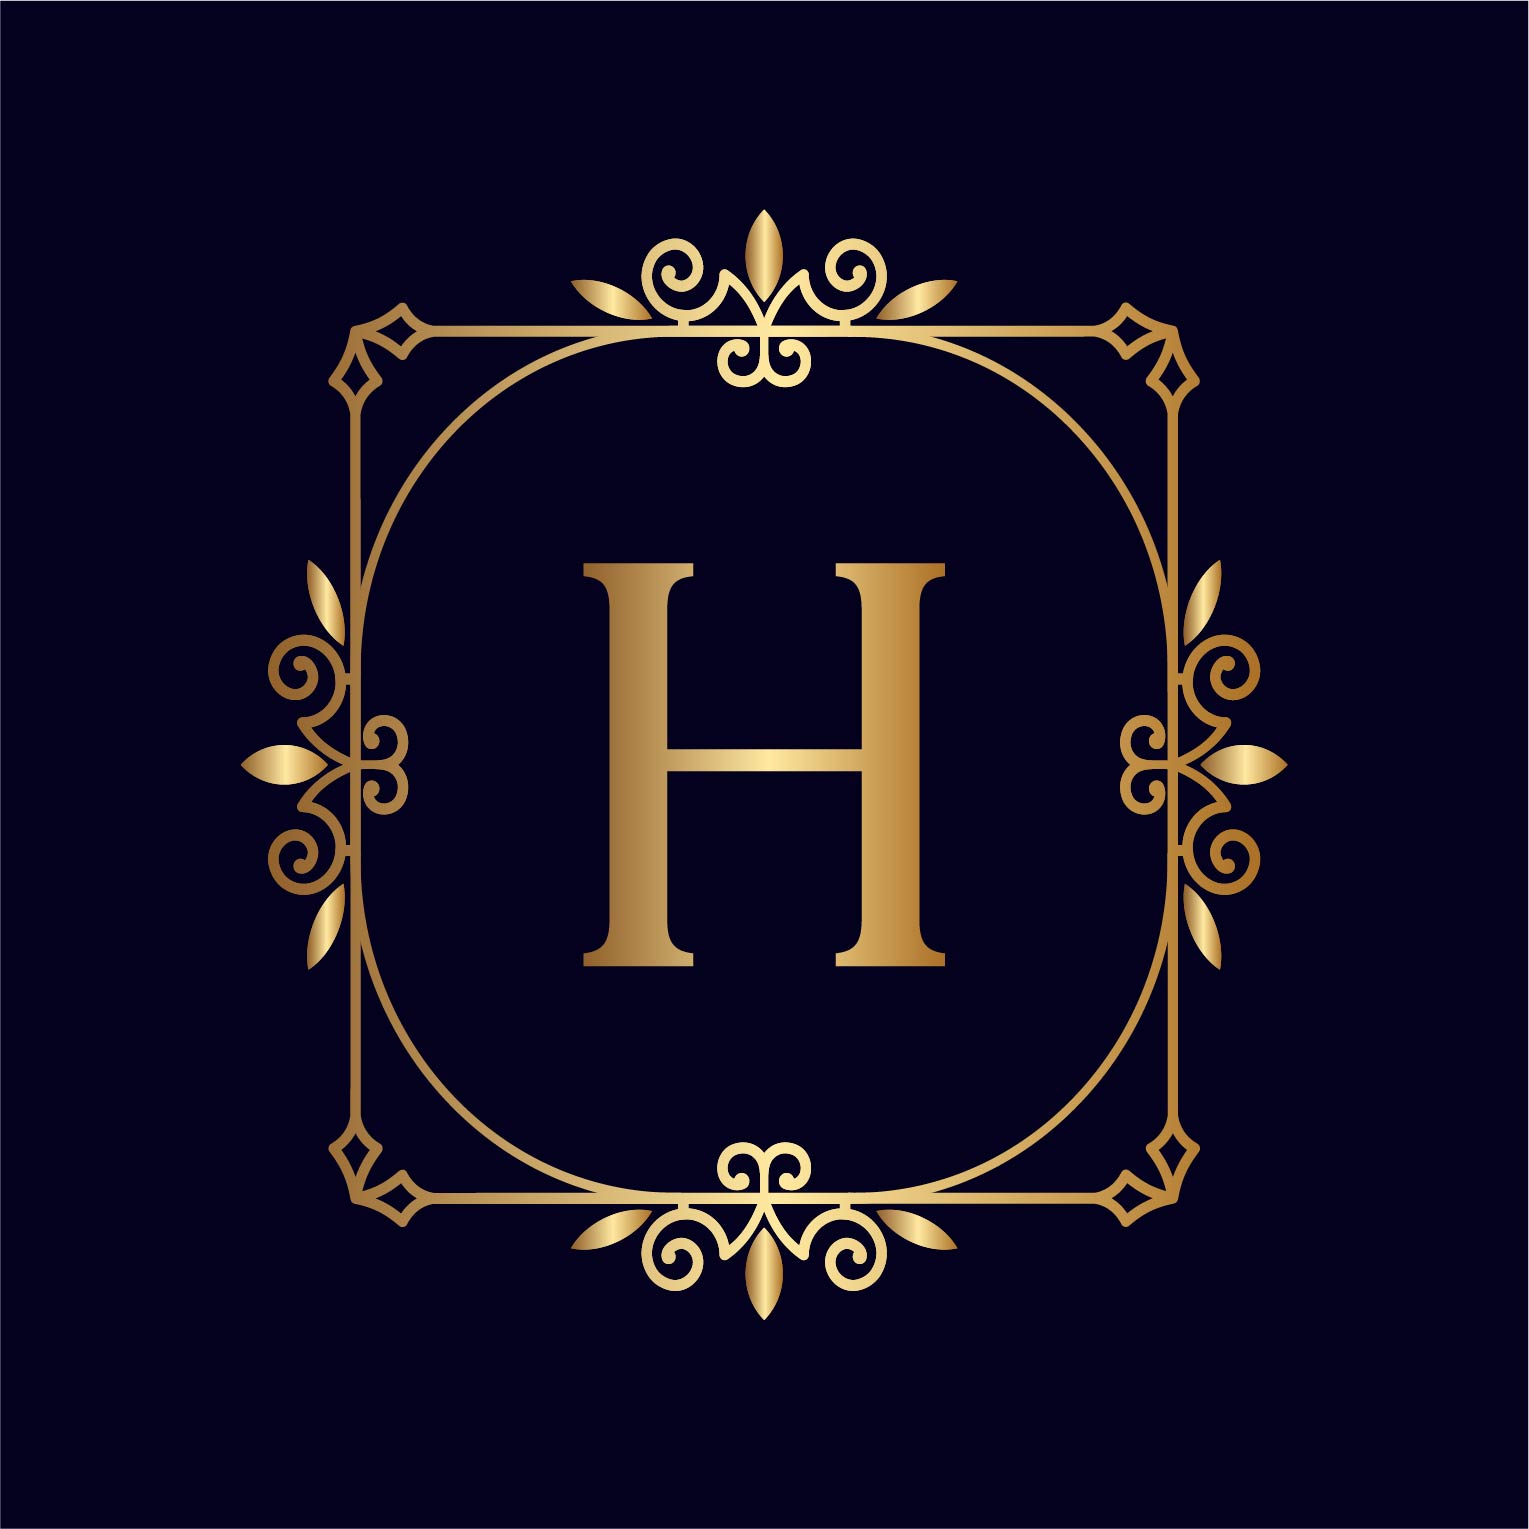 Artistic Gold Letter H Logos Design preview image.